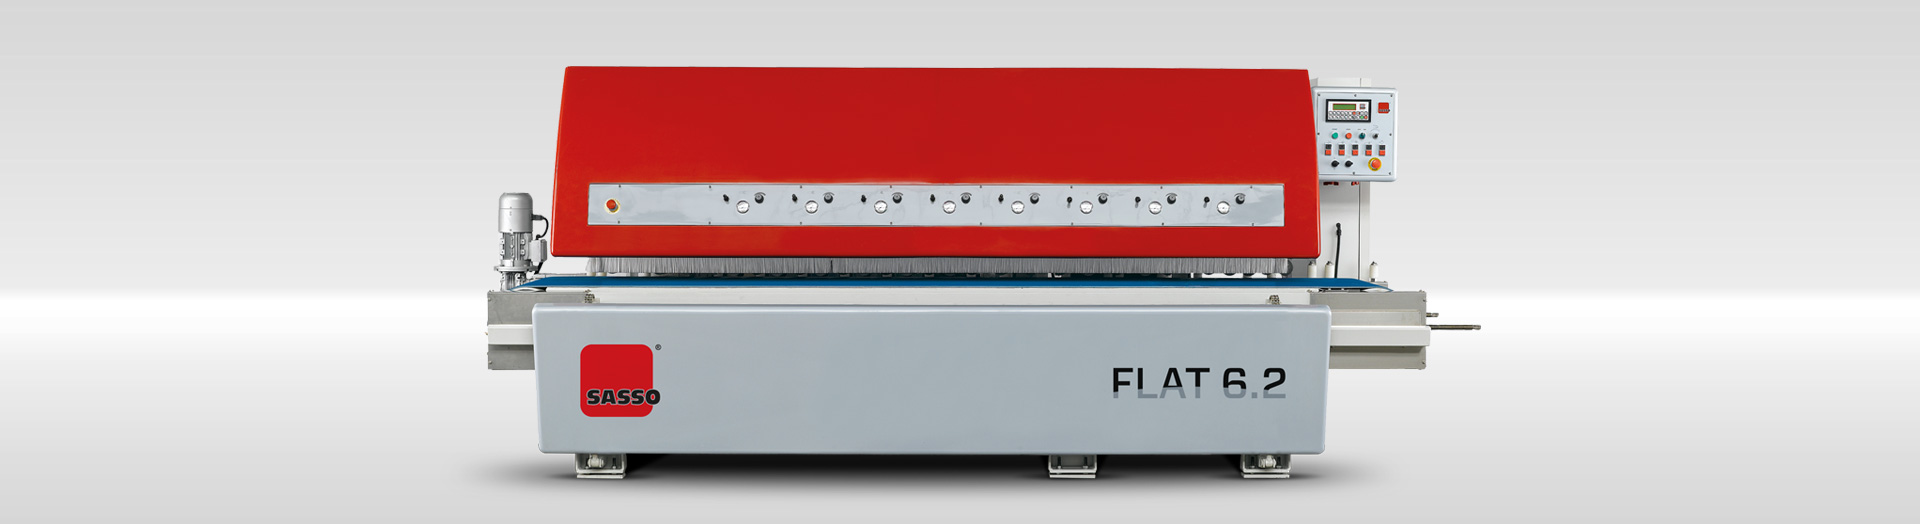 Flat 6.4